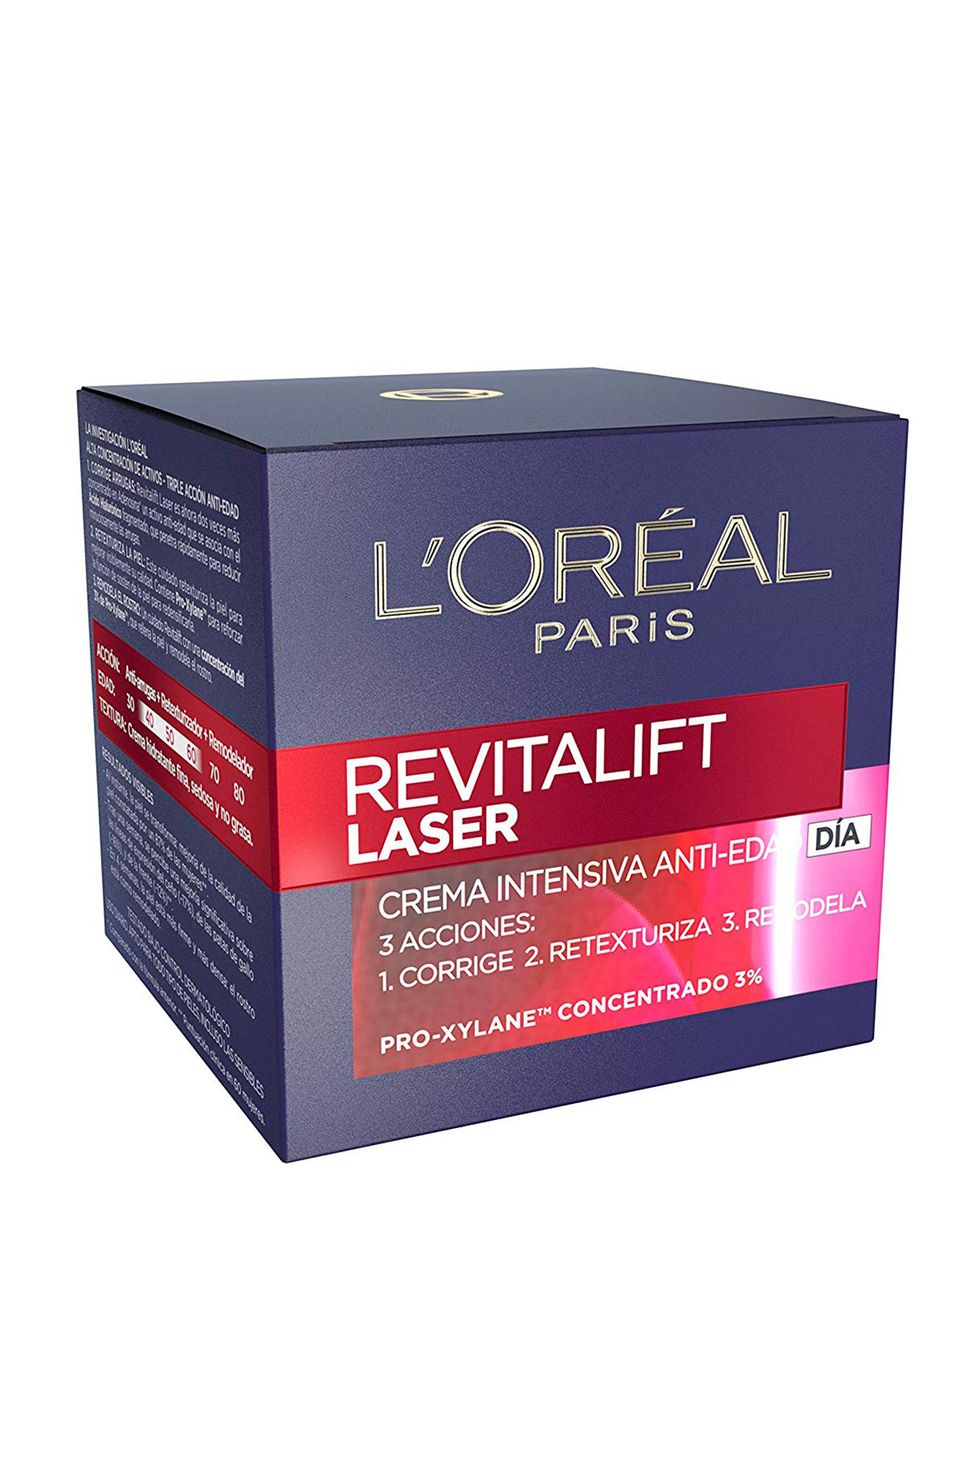 Revitalift Laser, L’Oréal